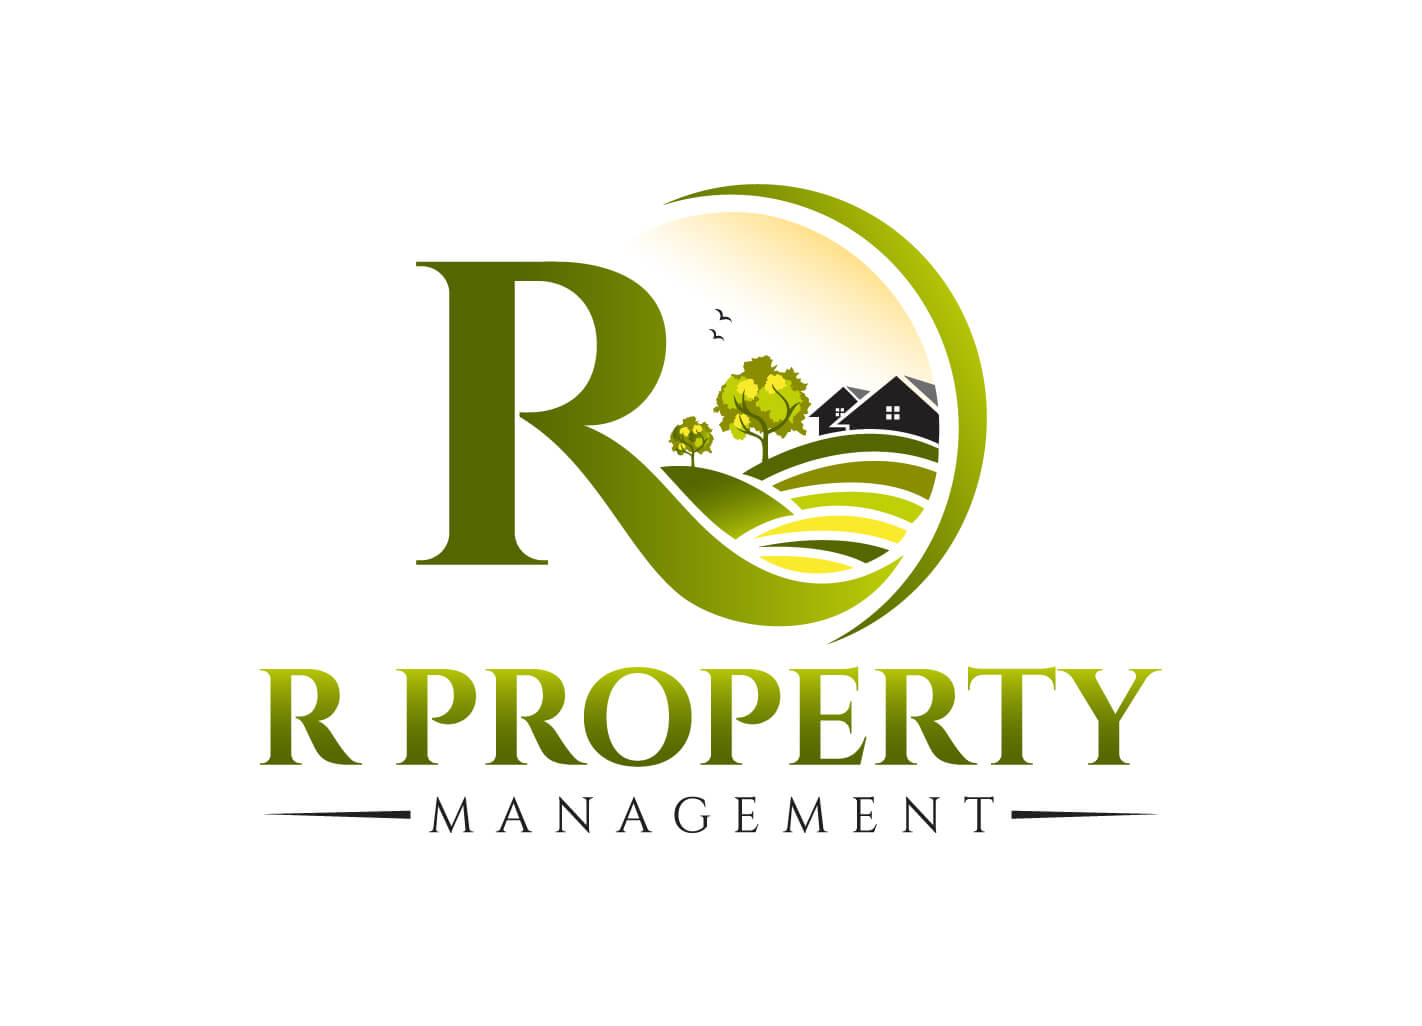 R properties. Fidu properties лого. Property Management logo. Фото дома для логотипа. Все для дома фото логотип.